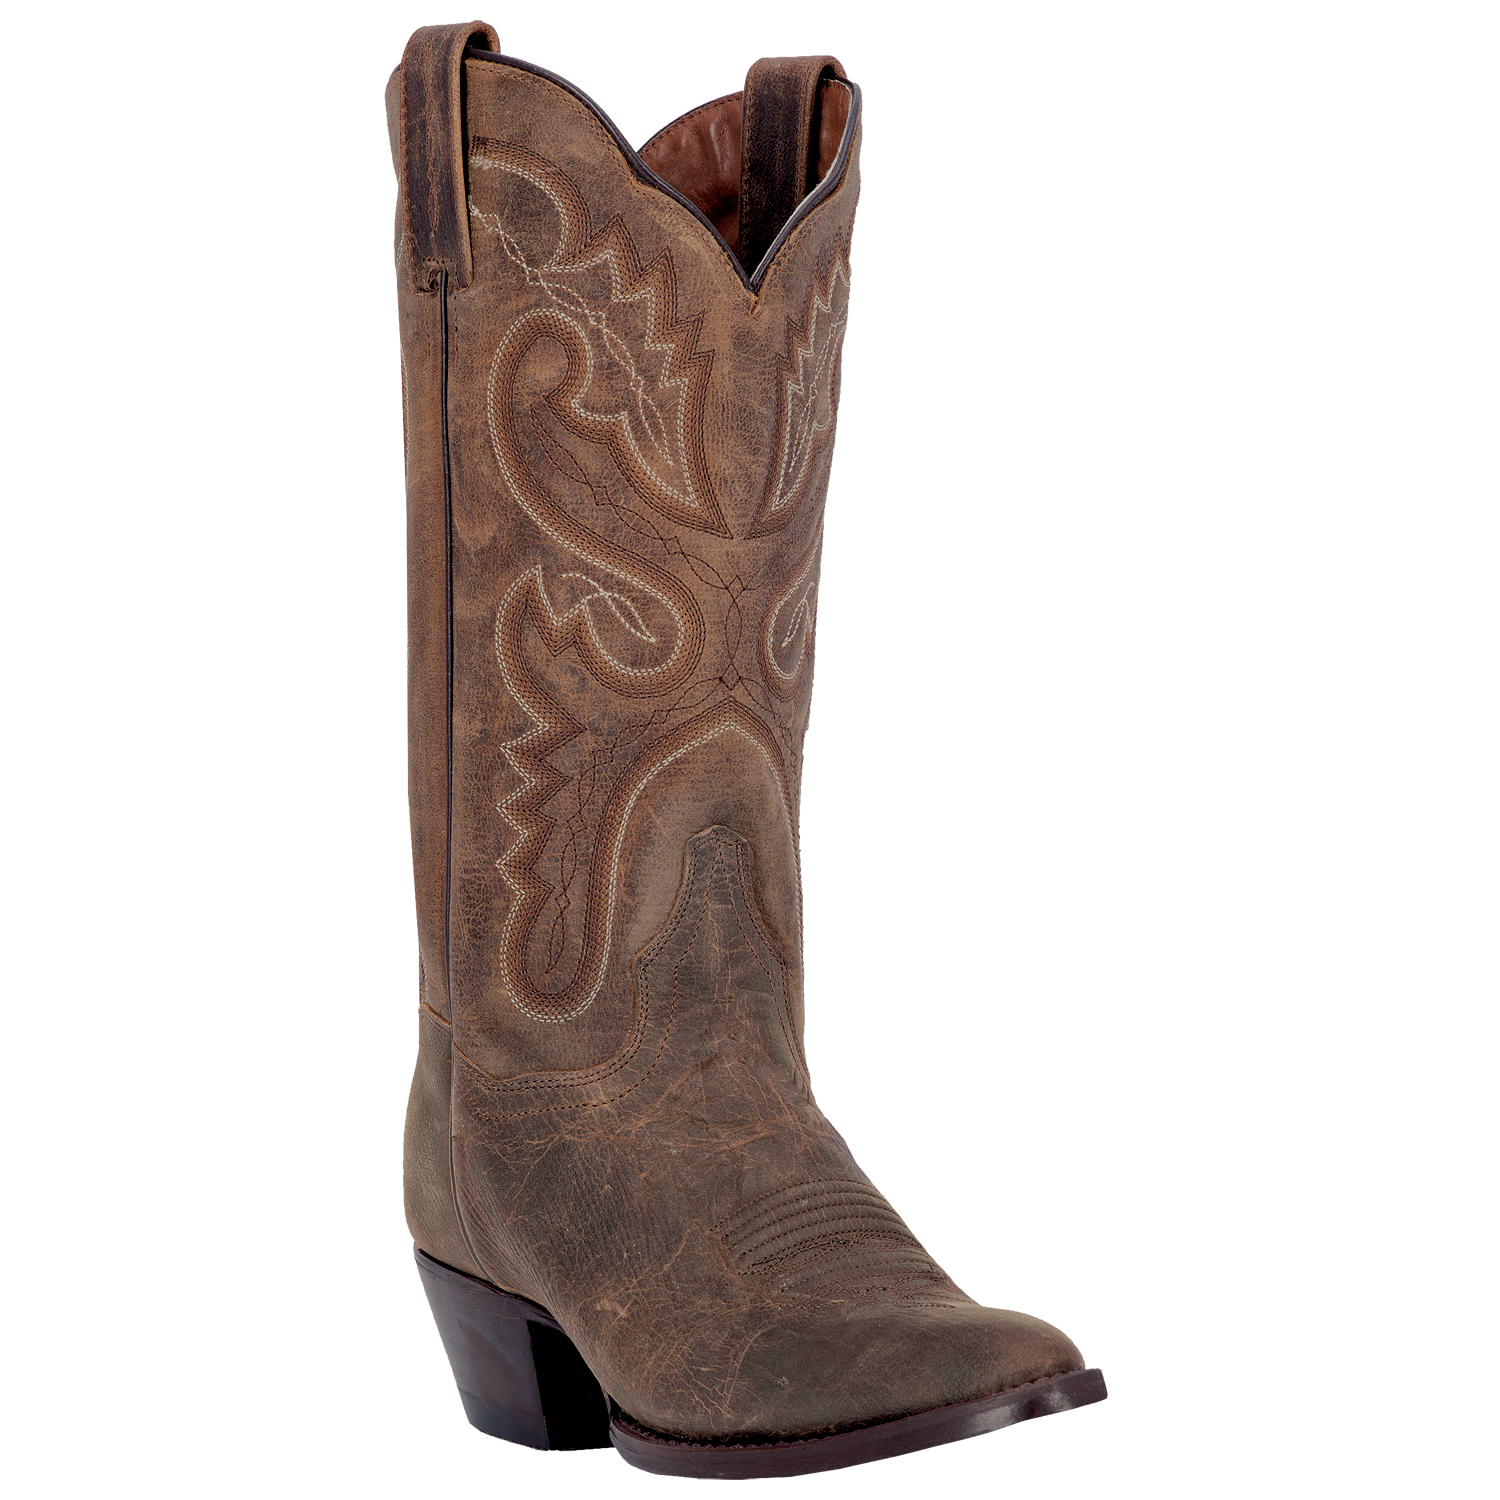 Pungo Ridge - Dan Post Ladies Marla Western Boots - Bay Apache, Women's ...